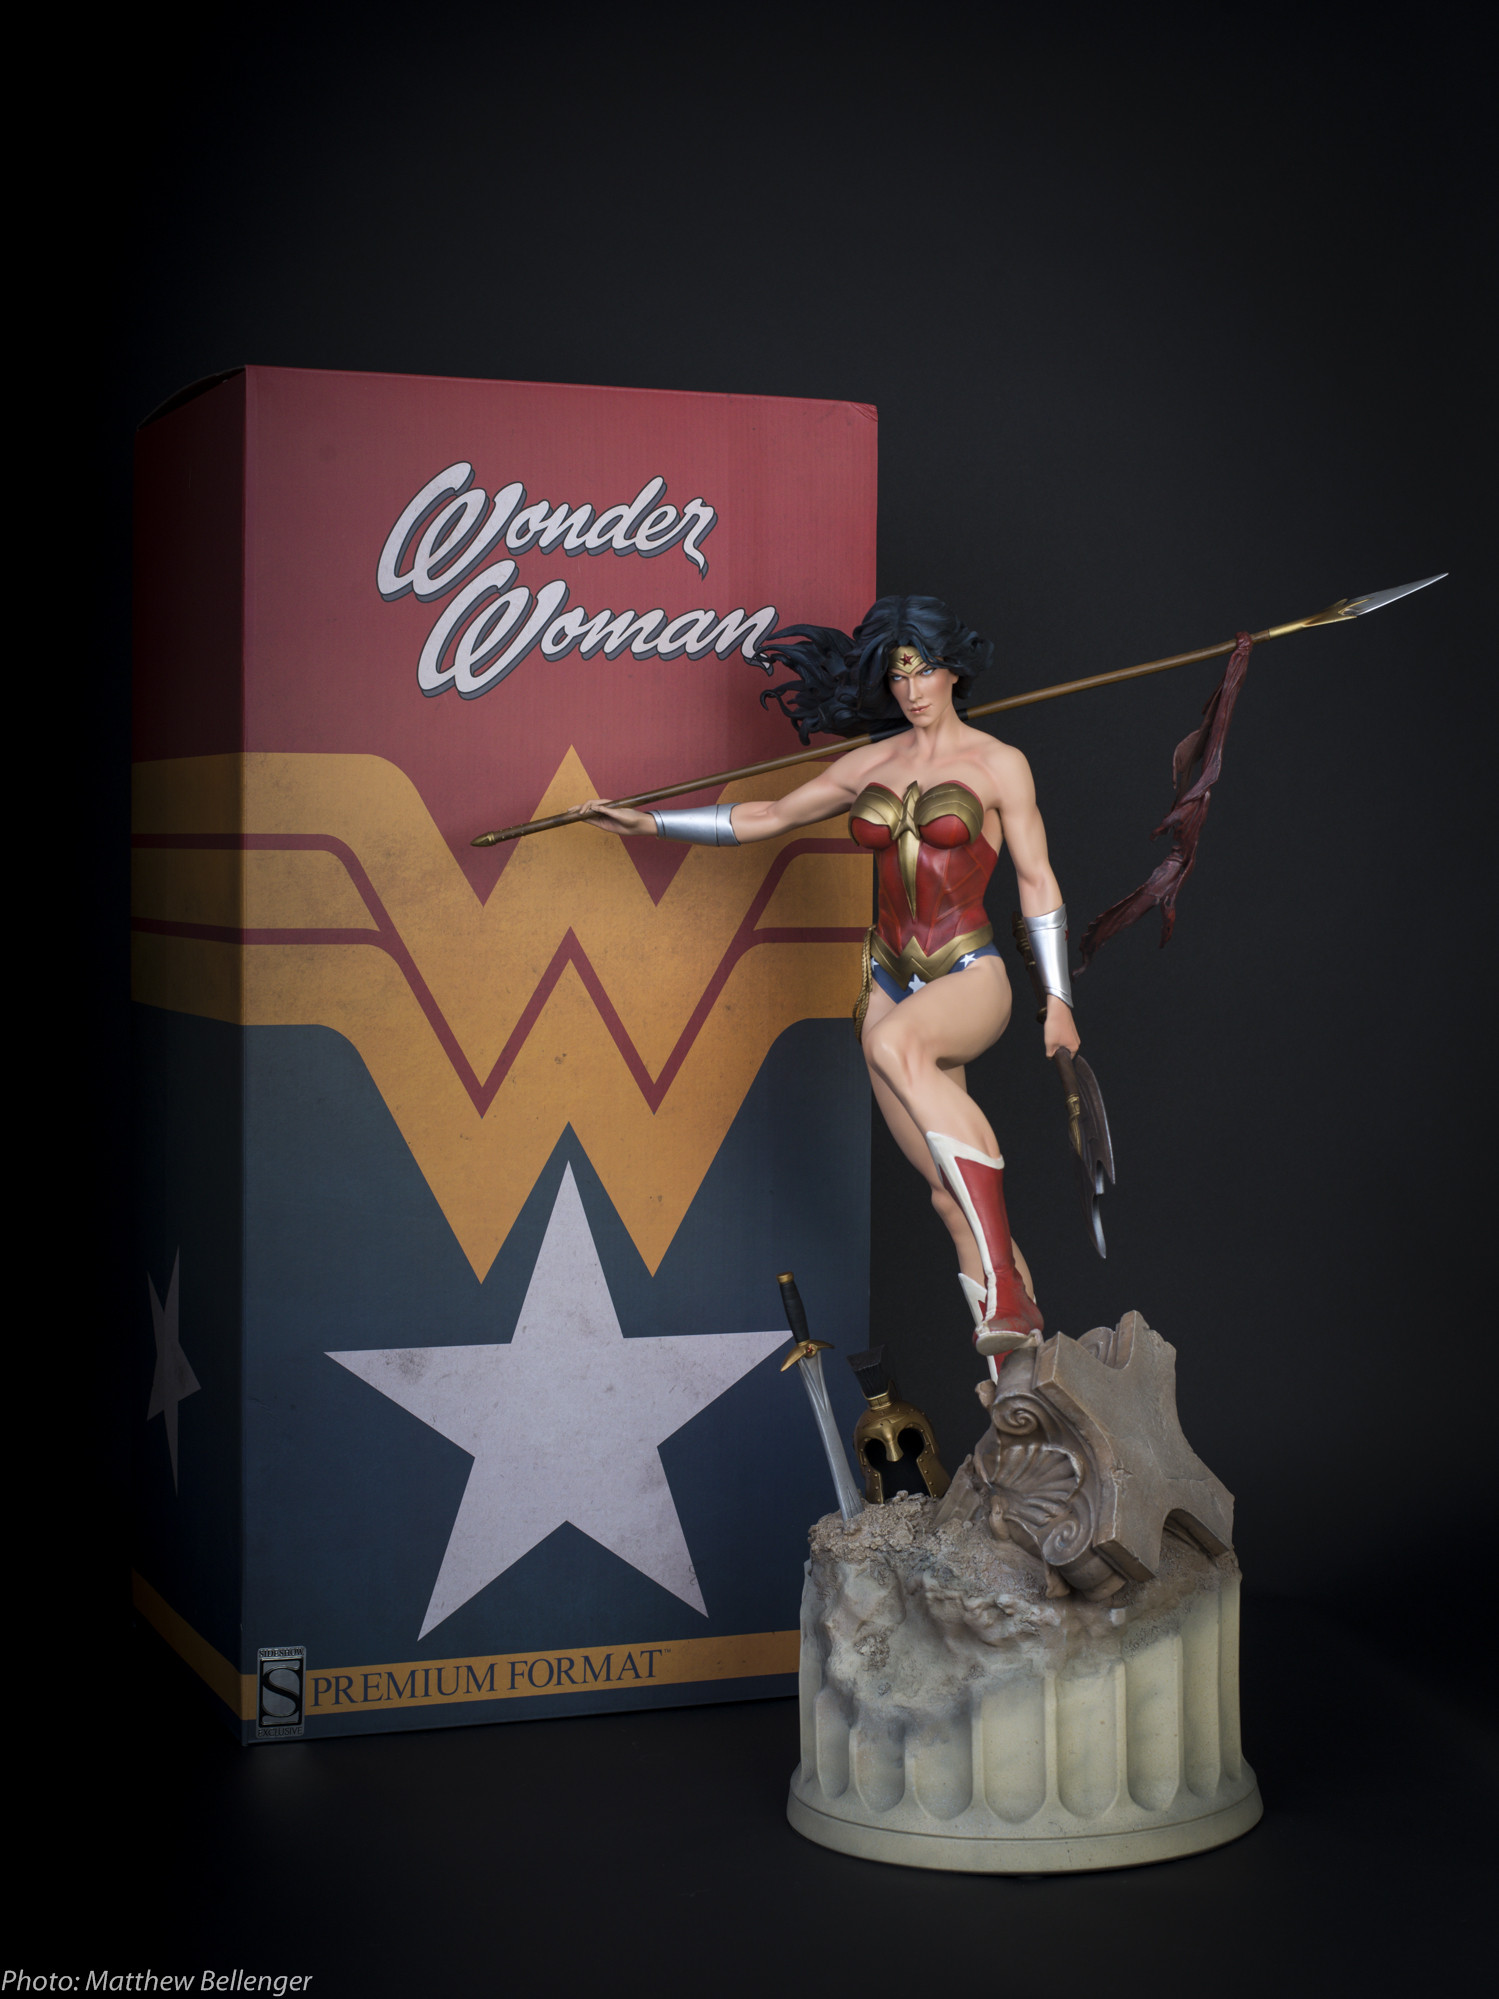 [Sideshow] Wonder Woman - Premium Format - LANÇADA!!! - Página 3 Attachment